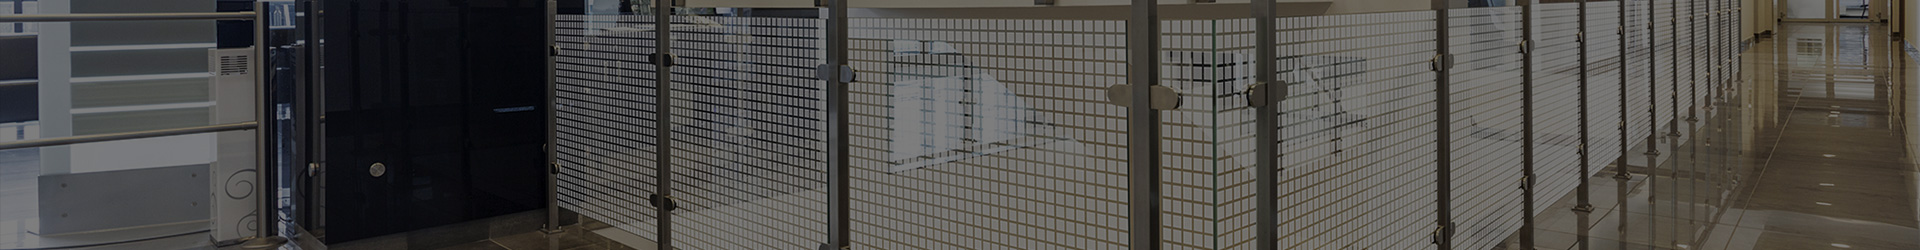 4 Panel  D-Handle (Corner Showers)